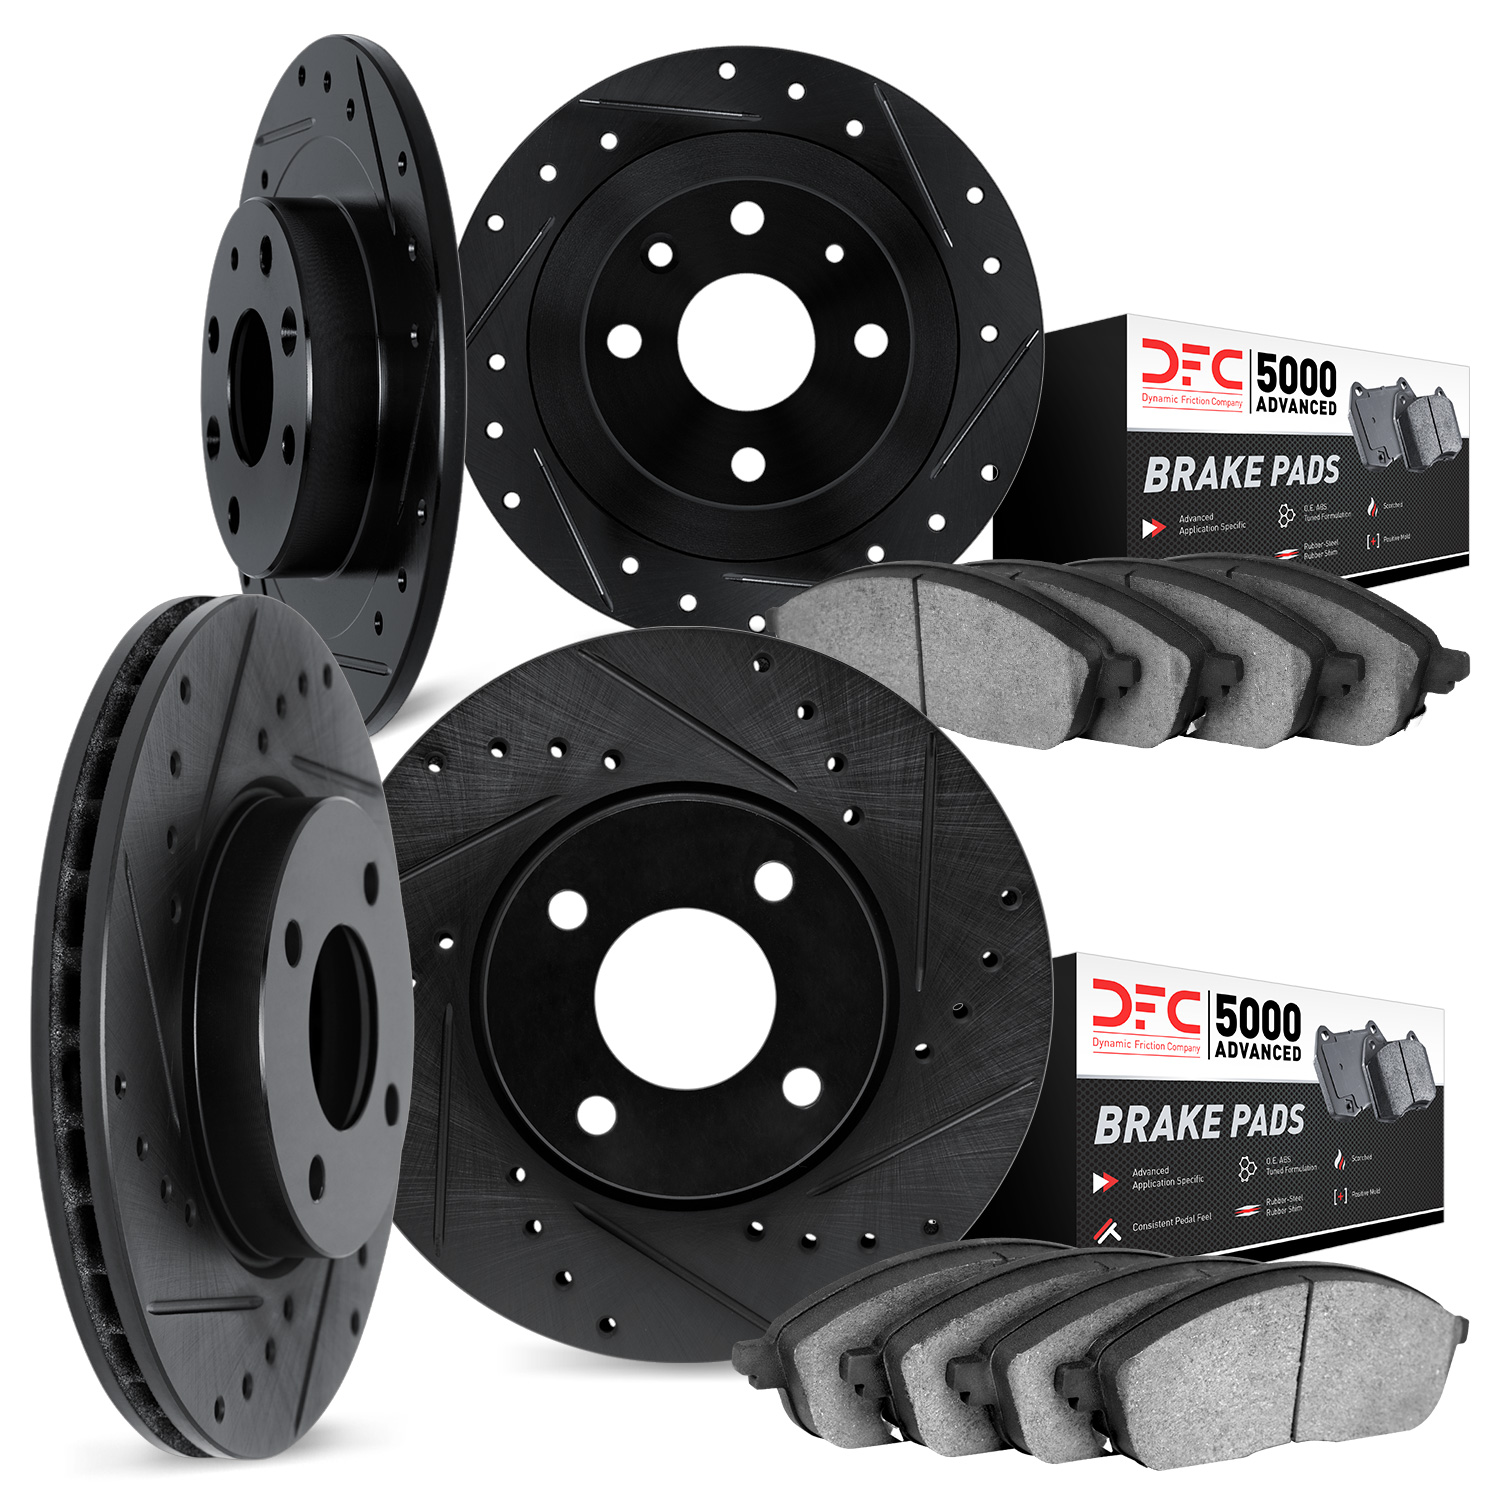 8504-07001 Drilled/Slotted Brake Rotors w/5000 Advanced Brake Pads Kit [Black], 2013-2019 Mopar, Position: Front and Rear